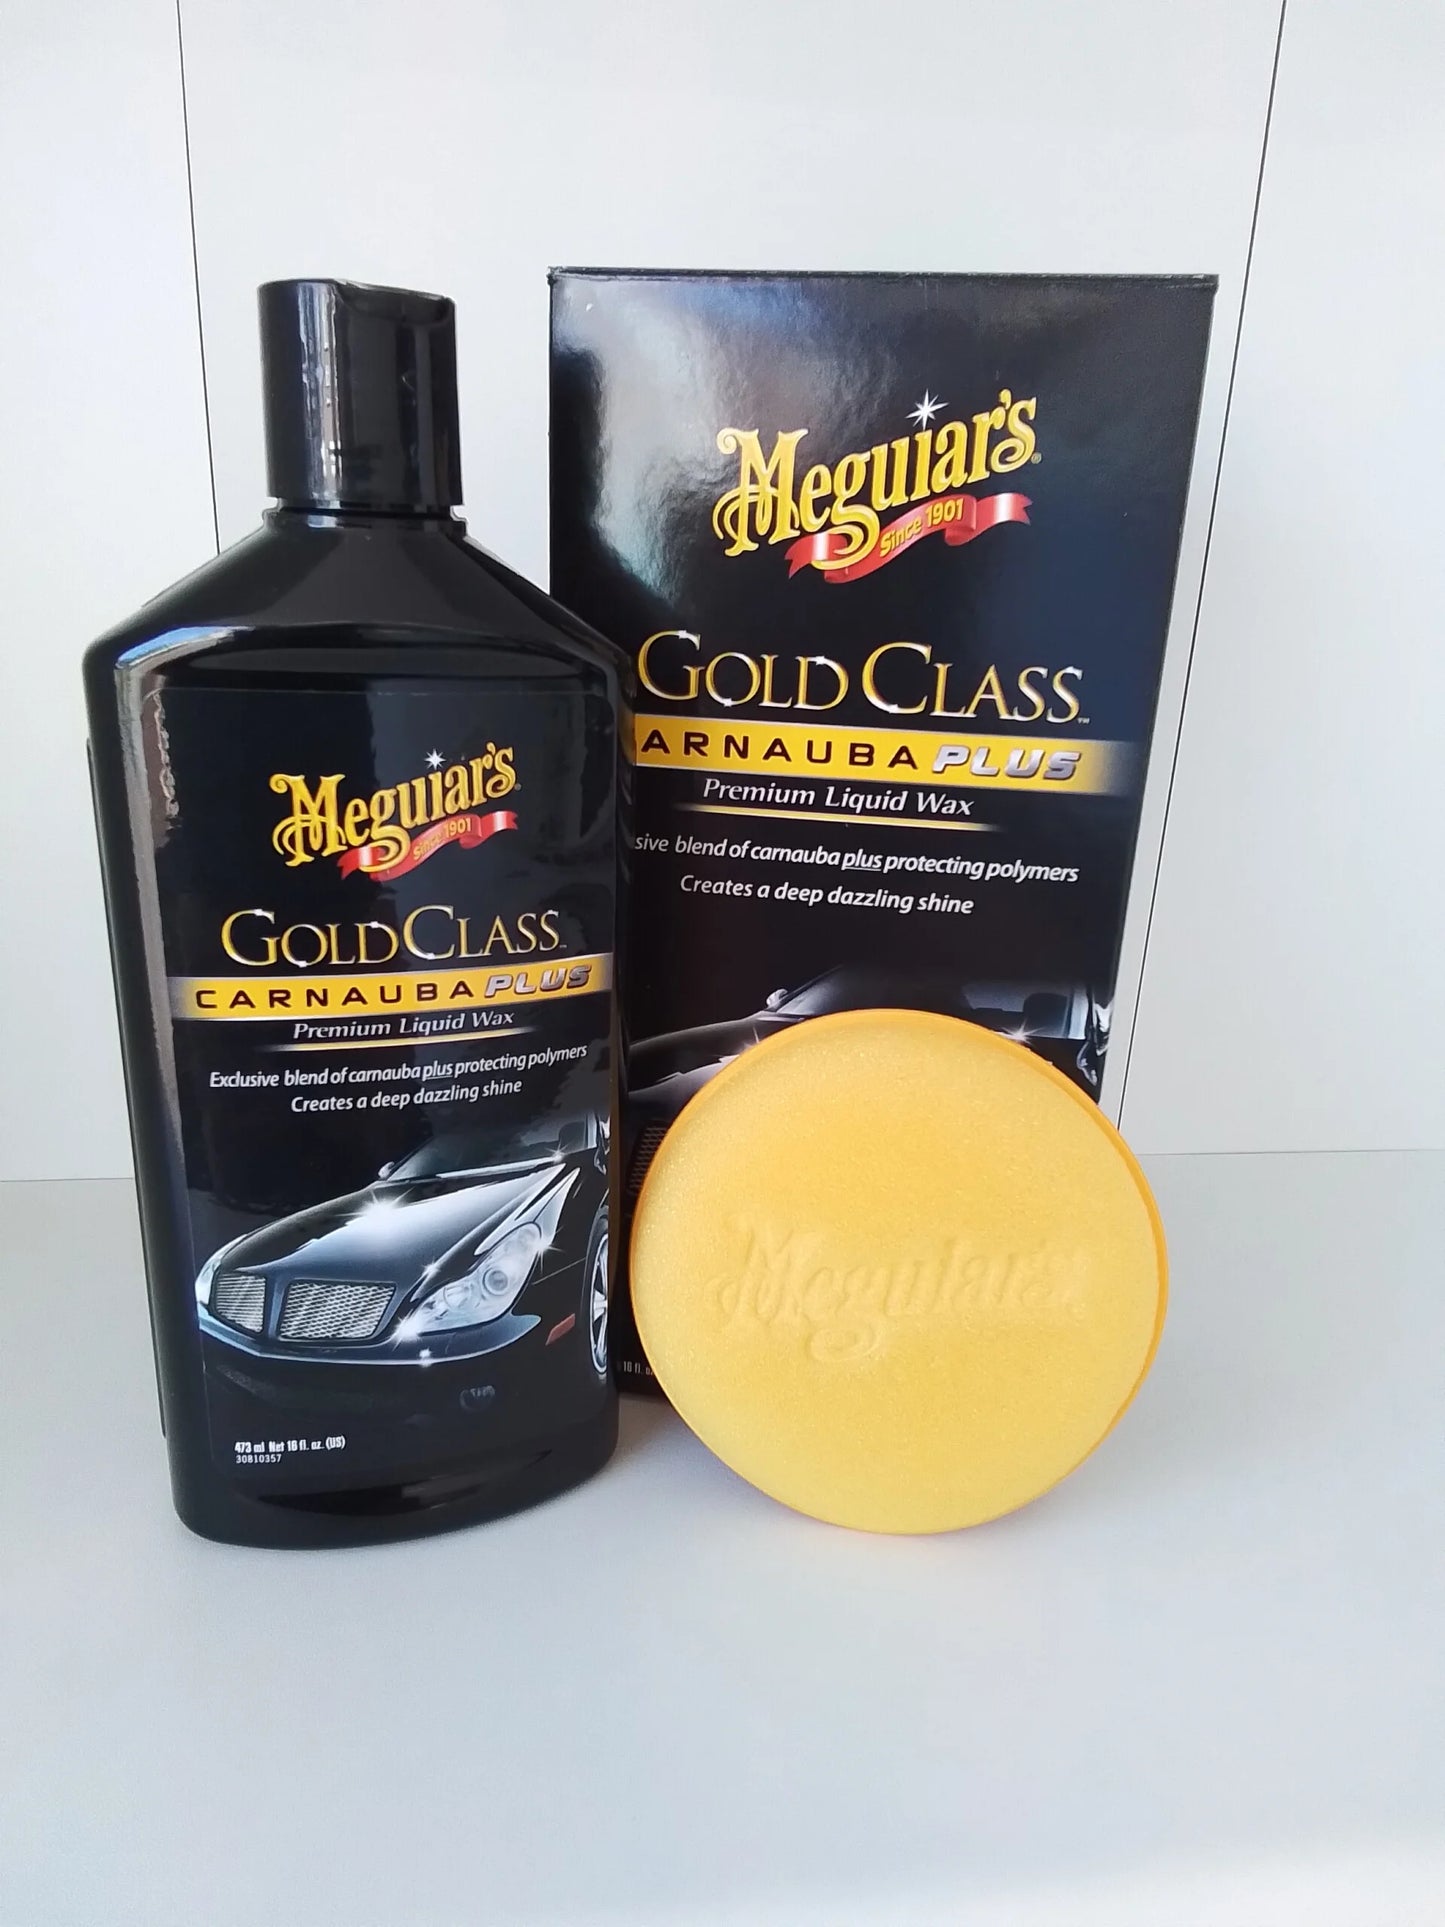 Meguiars Gold Class Carnauba Plus Premium Liquid wax